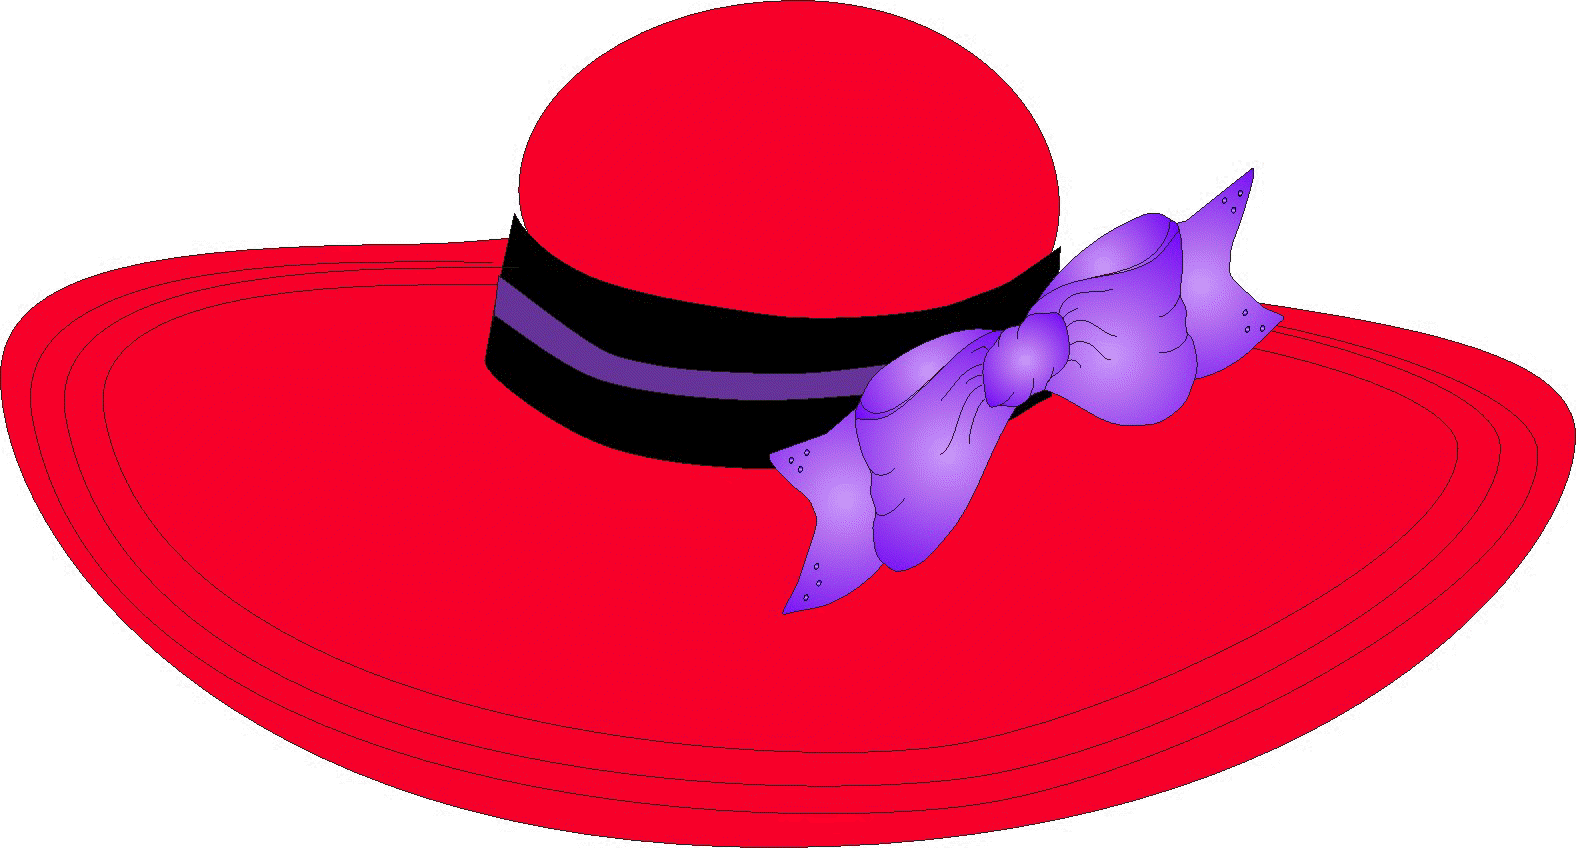 Red Hat Clip Art - ClipArt Best